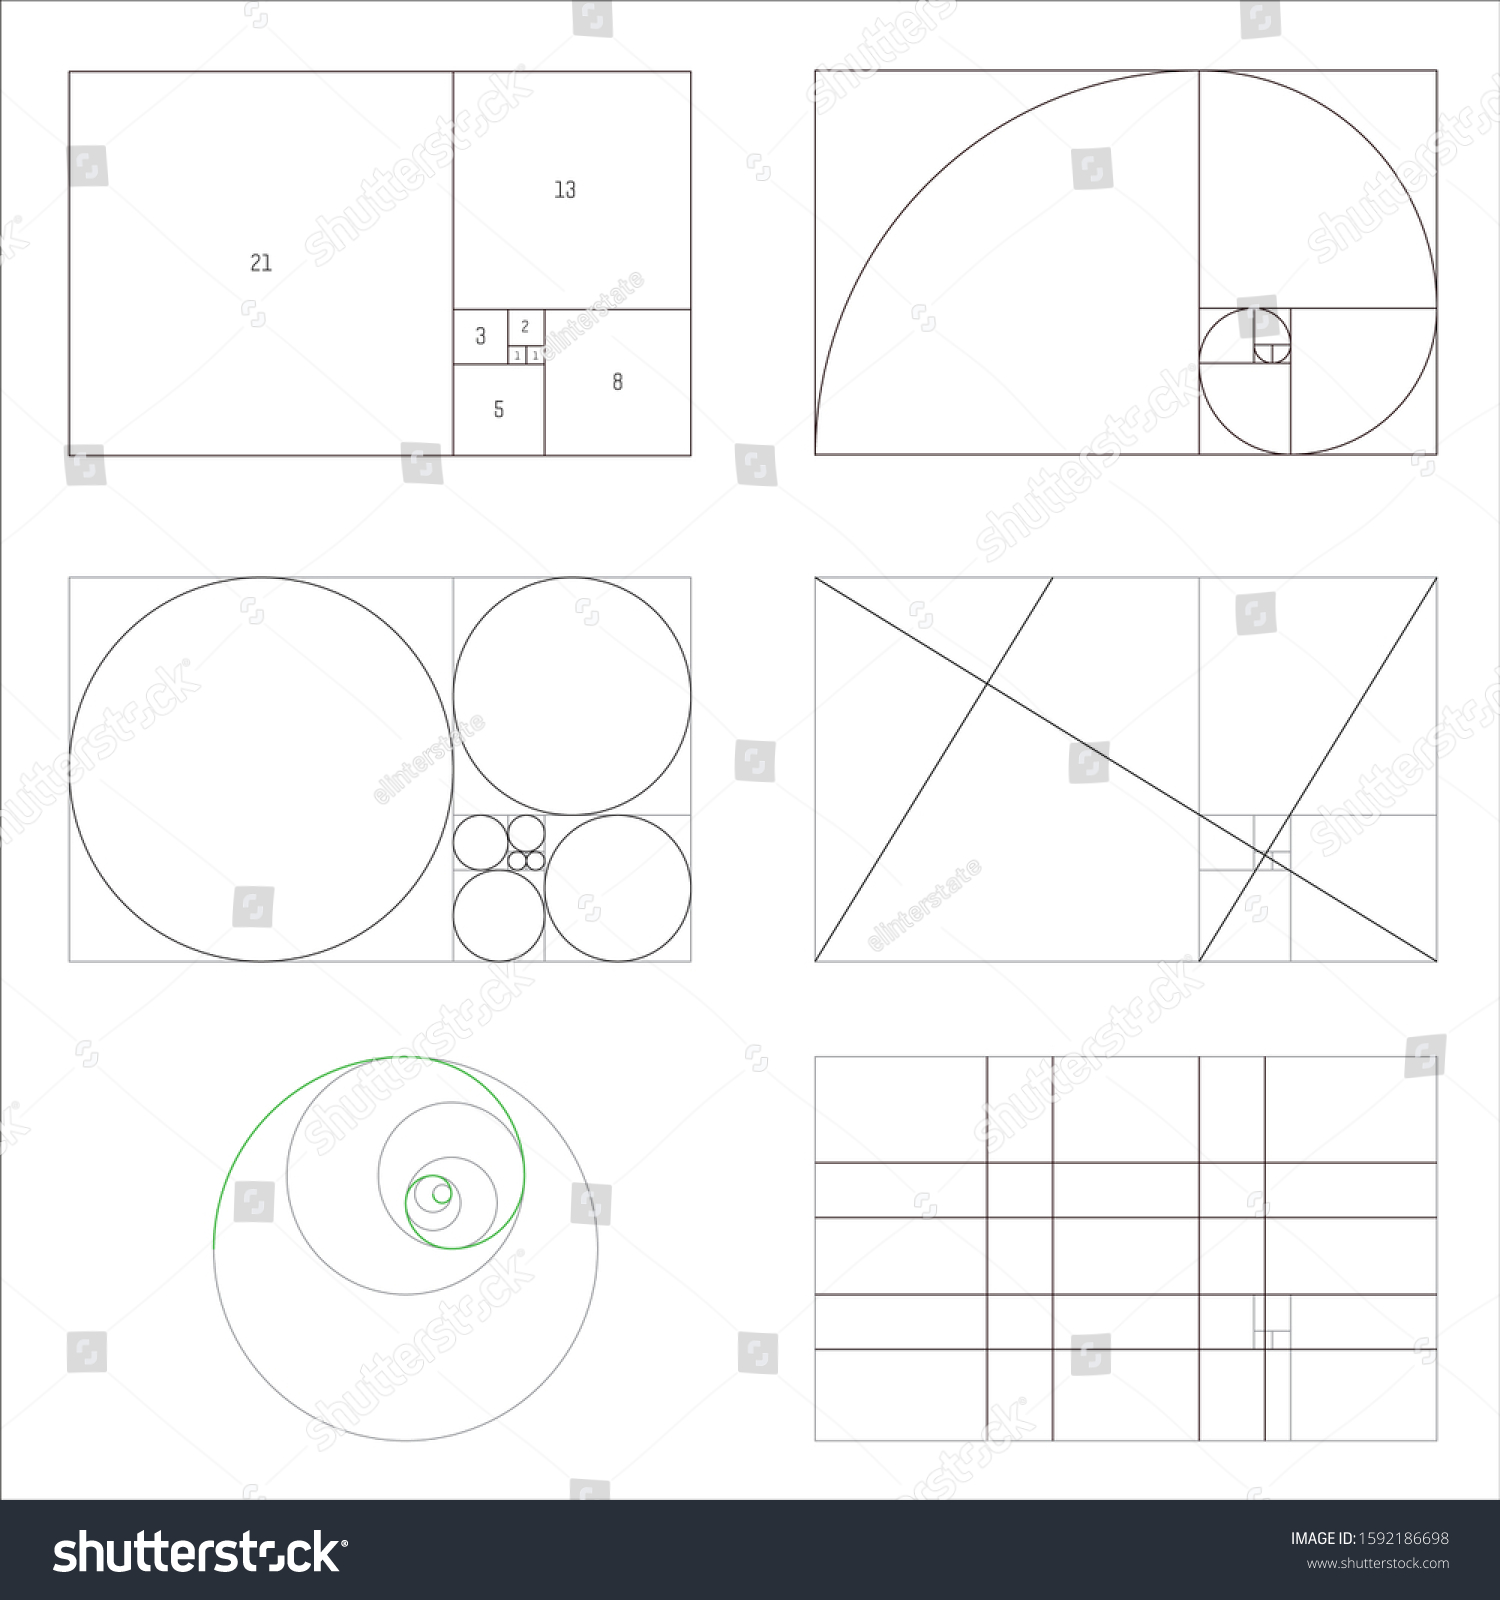 Fibonaci spiral Images, Stock Photos & Vectors | Shutterstock